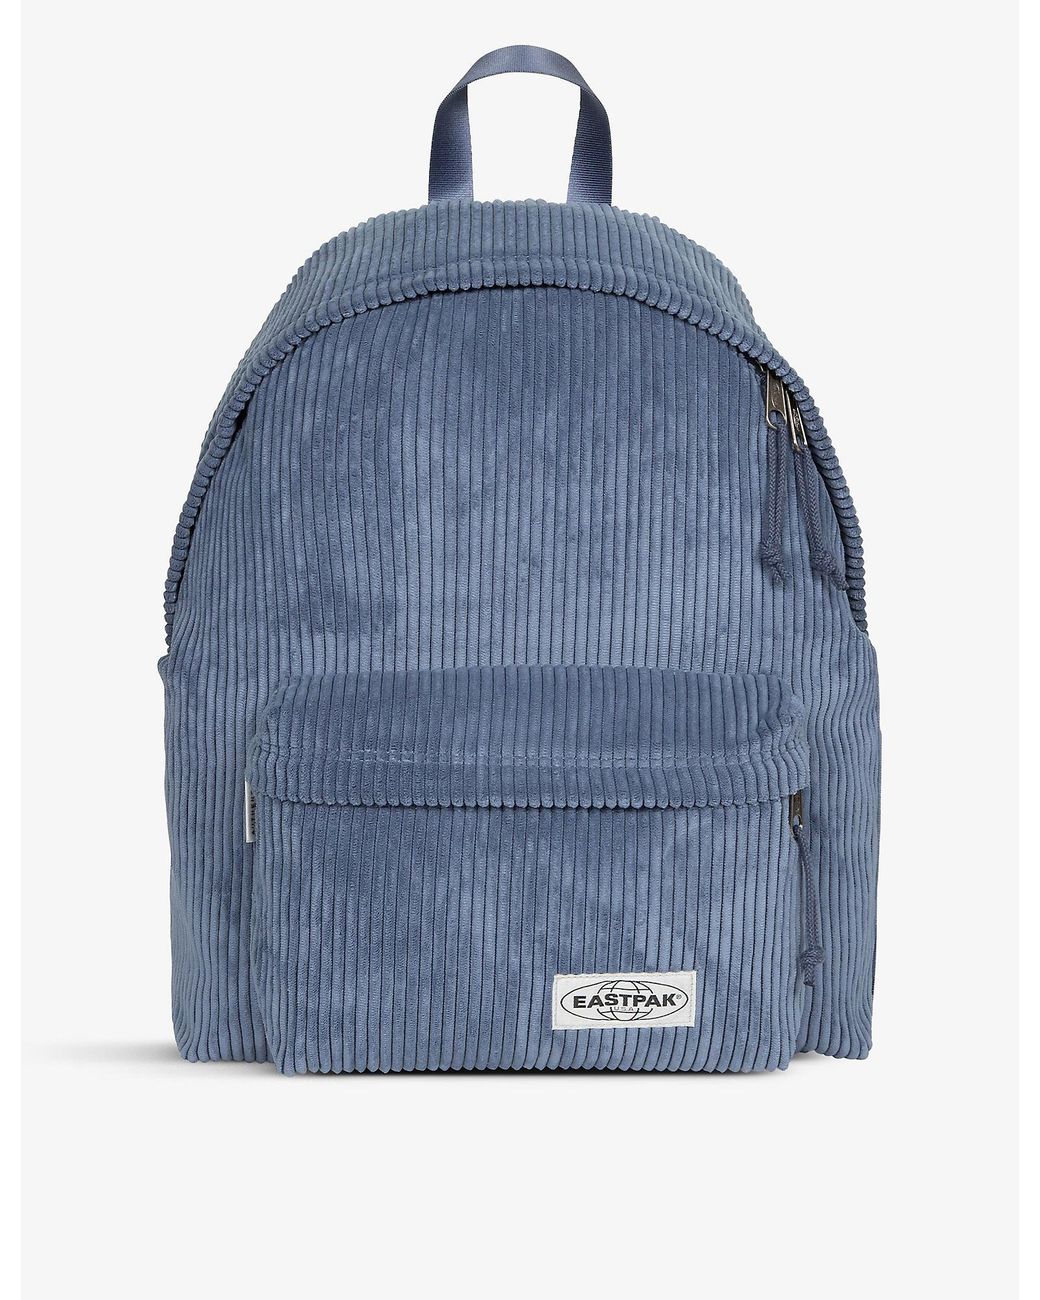 Eastpak Softrib Padded Woven Backpack in |